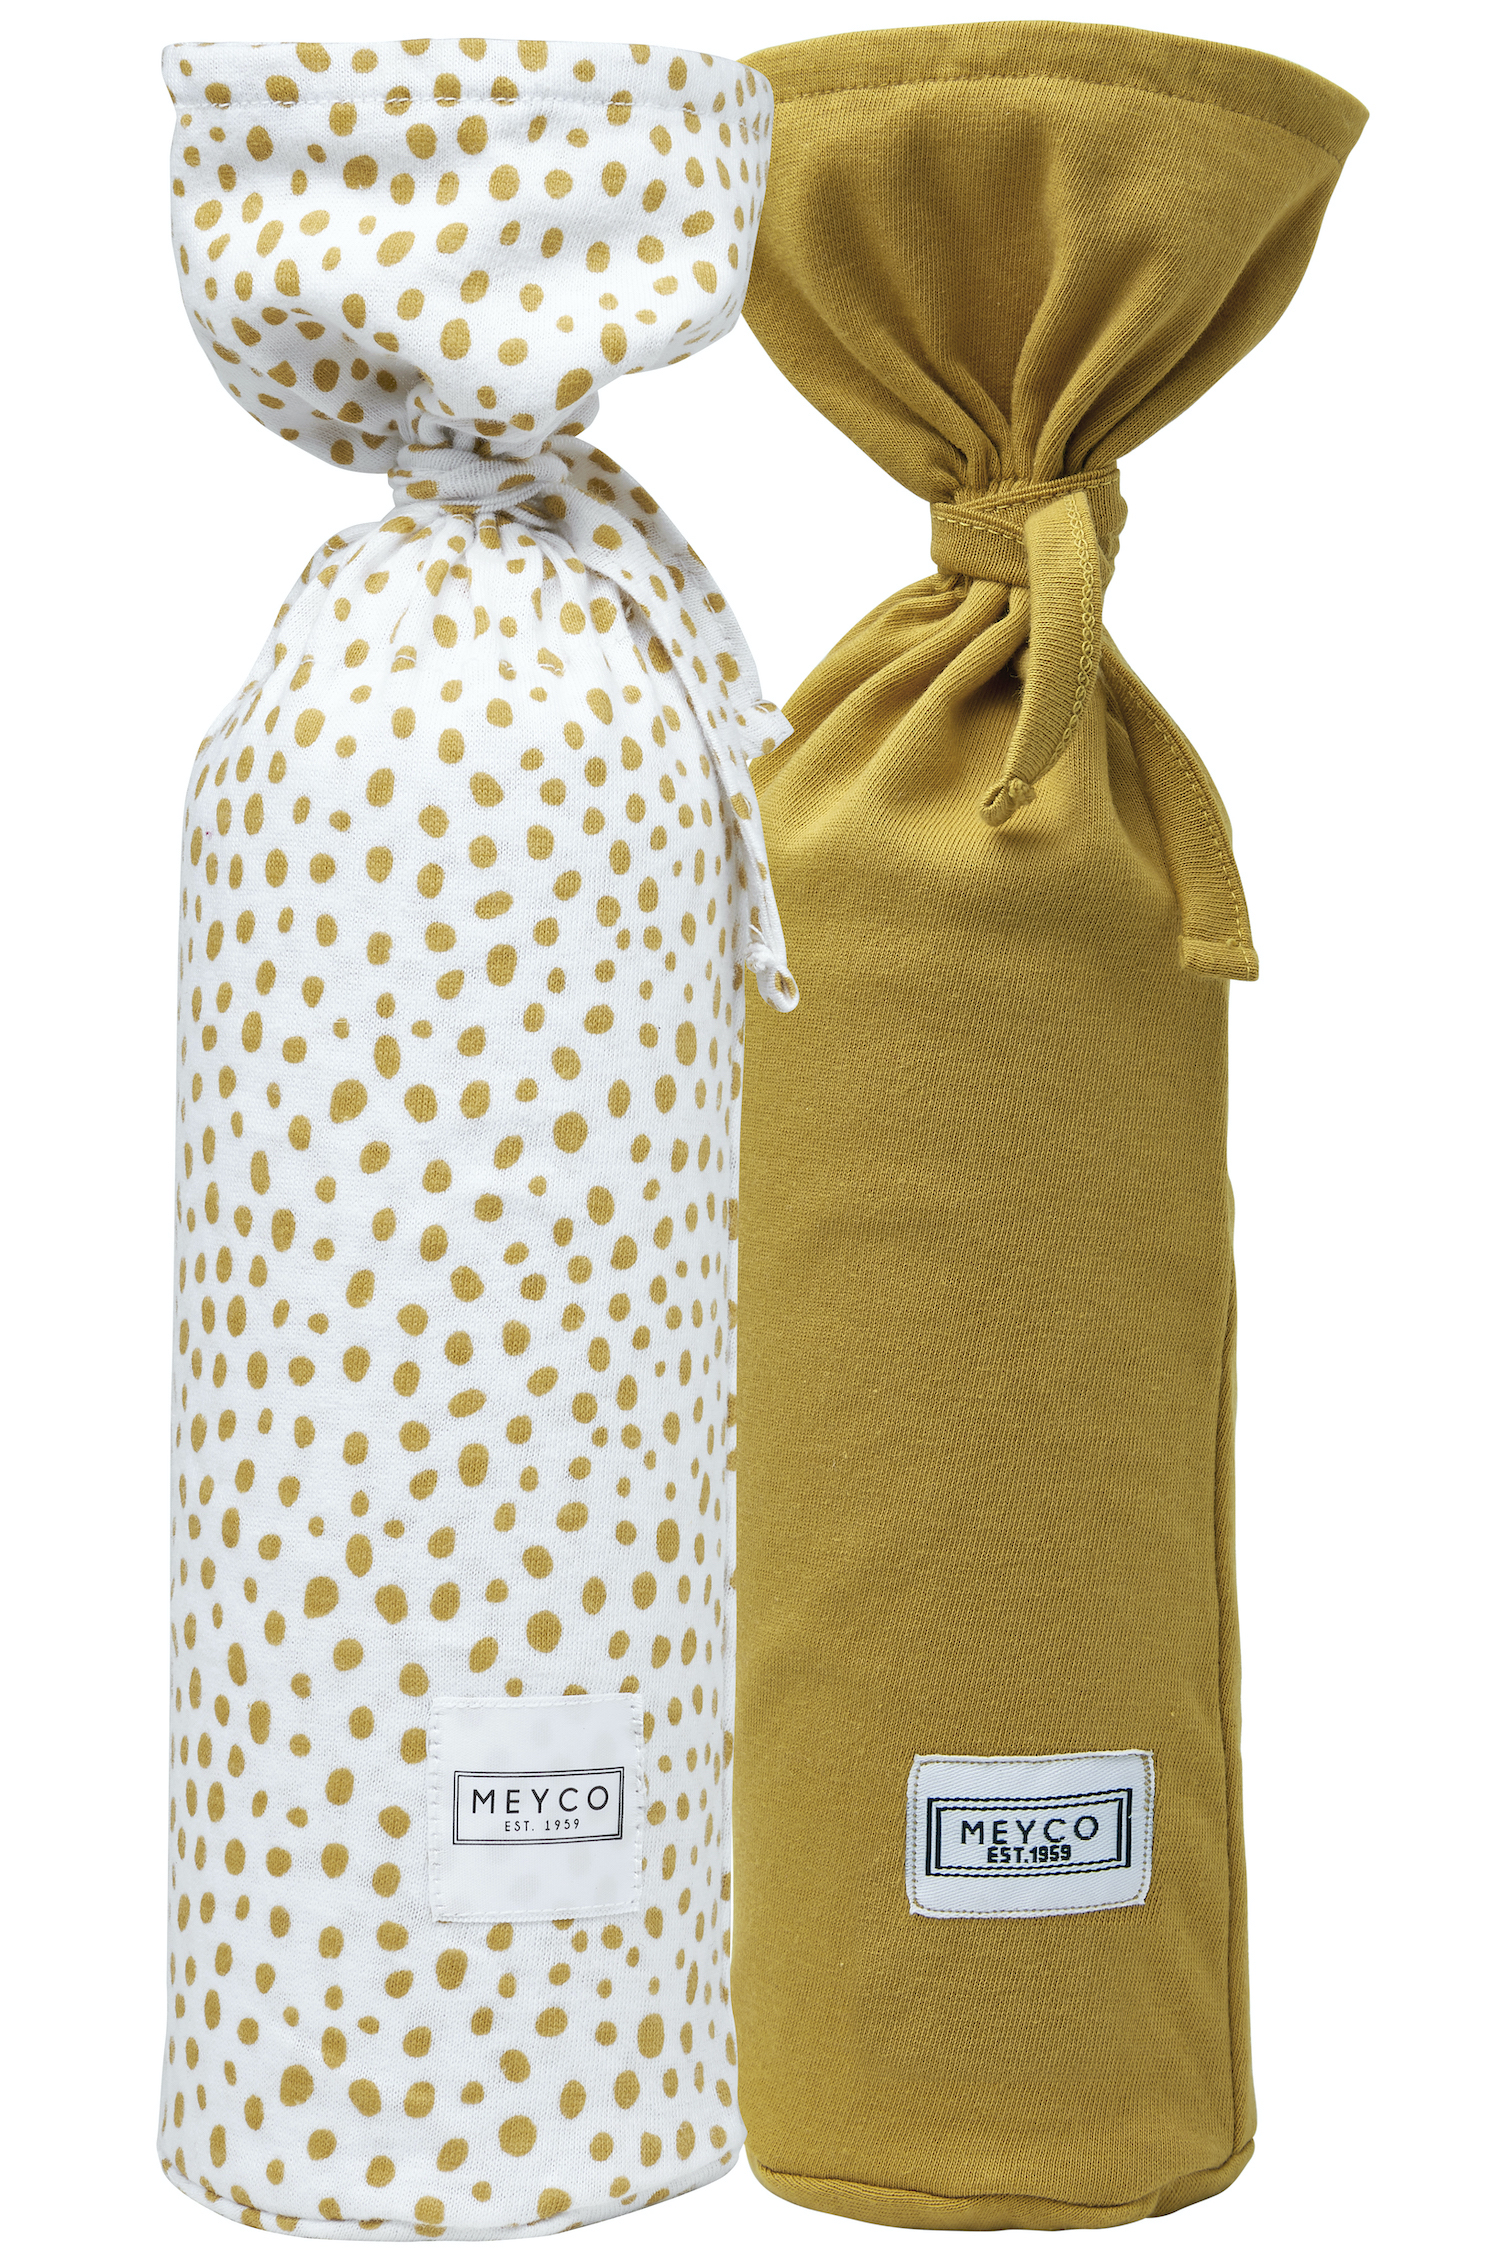 Hot Water Bottle Cover Basic Jersey/Cheetah 2-pack - Honey Gold - 13xh35cm